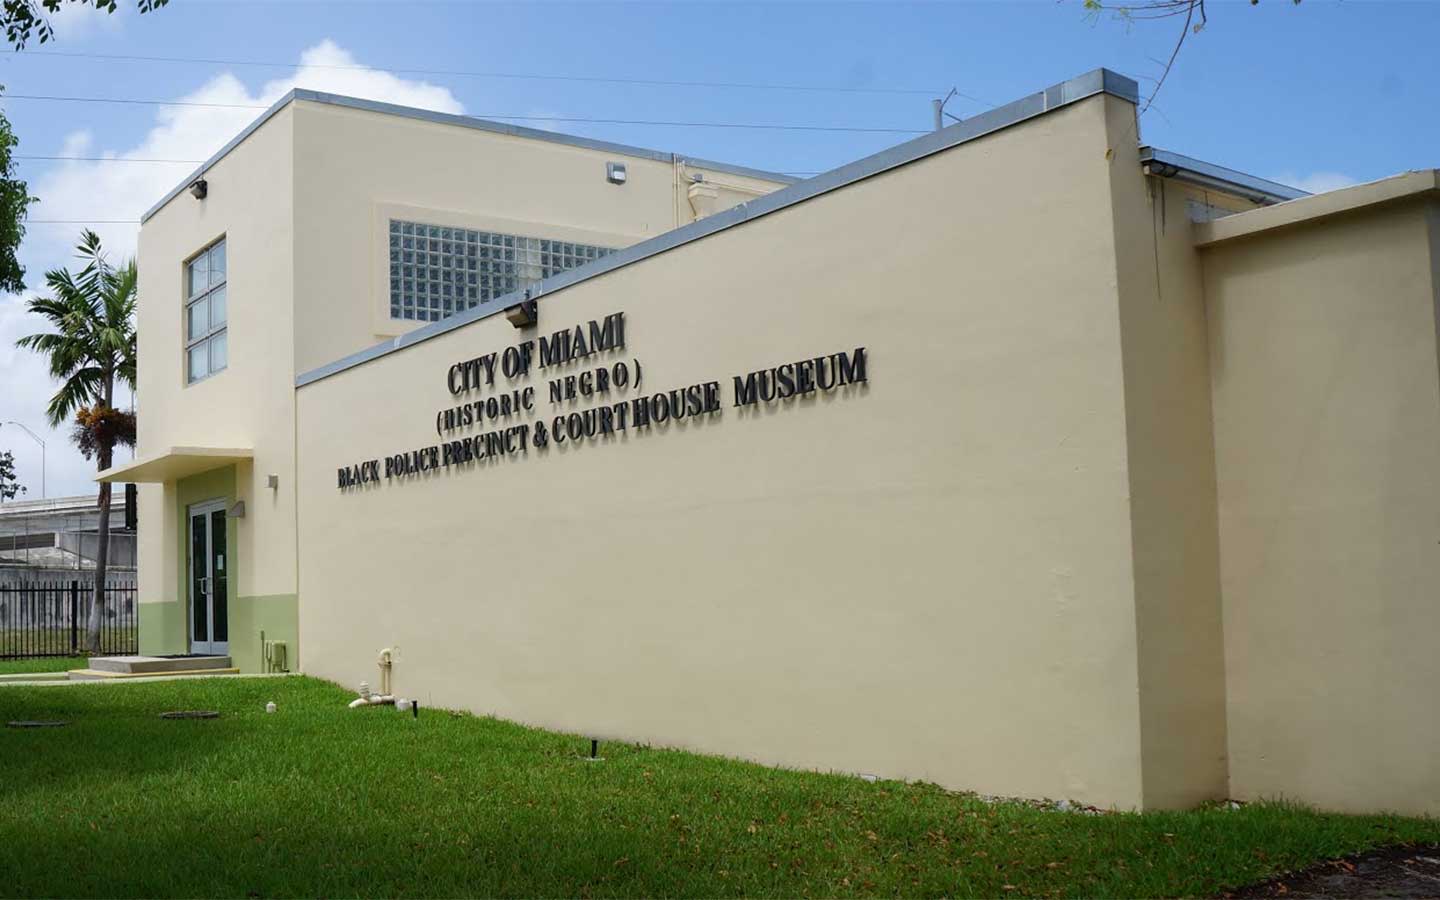 Miamis Black Police Precinct & Courthouse Museum